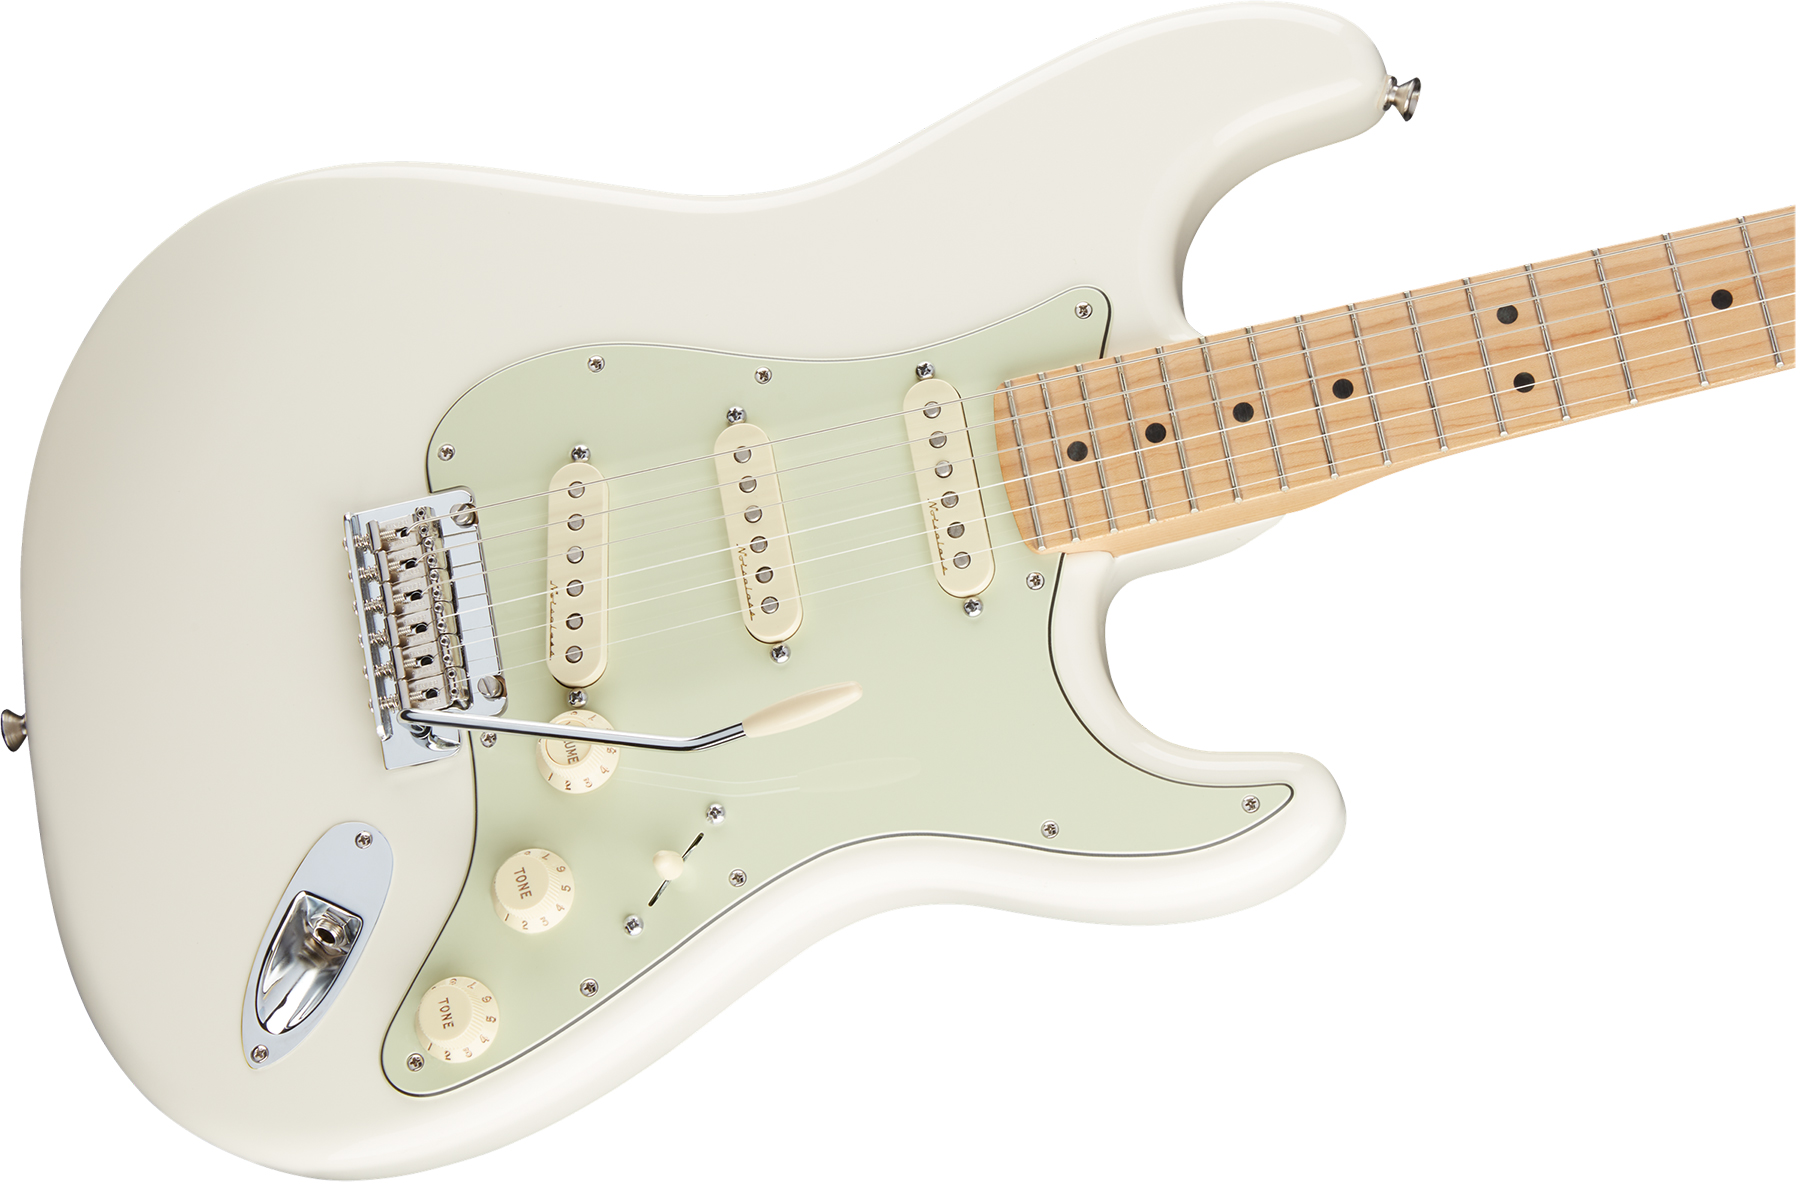 Fender Strat Deluxe Roadhouse Mex Mn - Olympic White - Str shape electric guitar - Variation 2